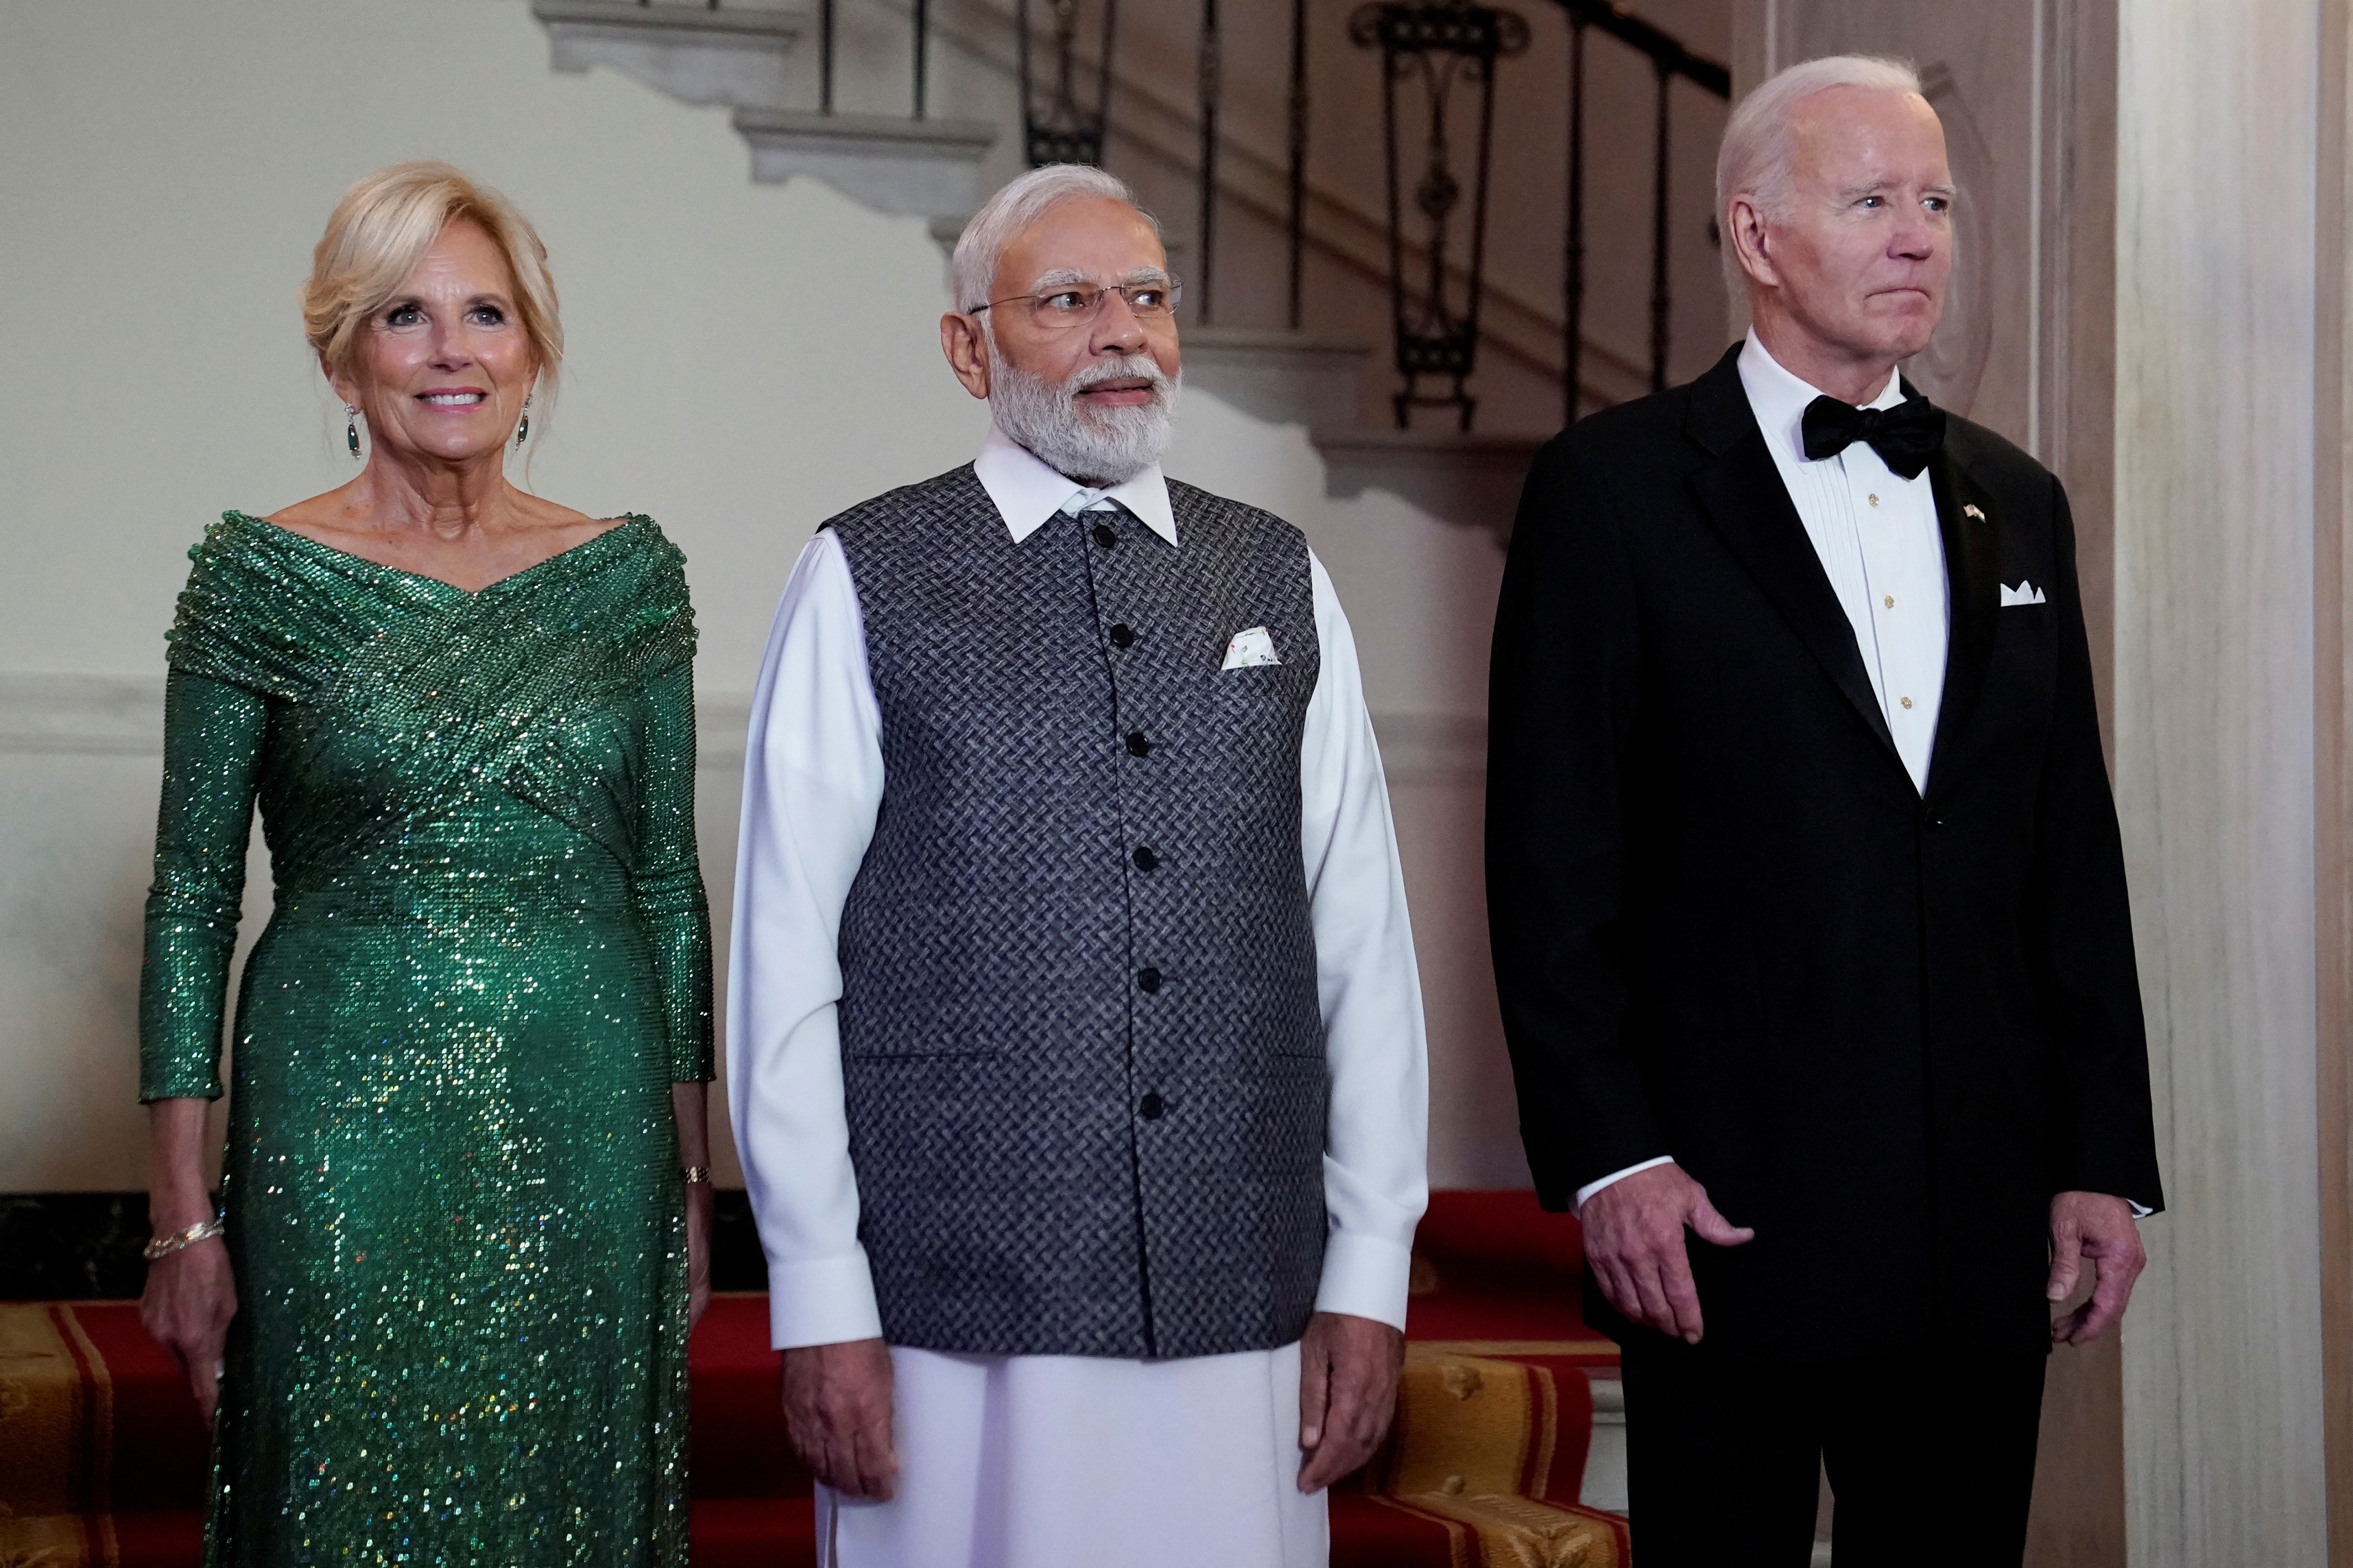 U.S. President Joe Biden hosts an official state dinner for India's Prime Minister Narendra Modi at the White House